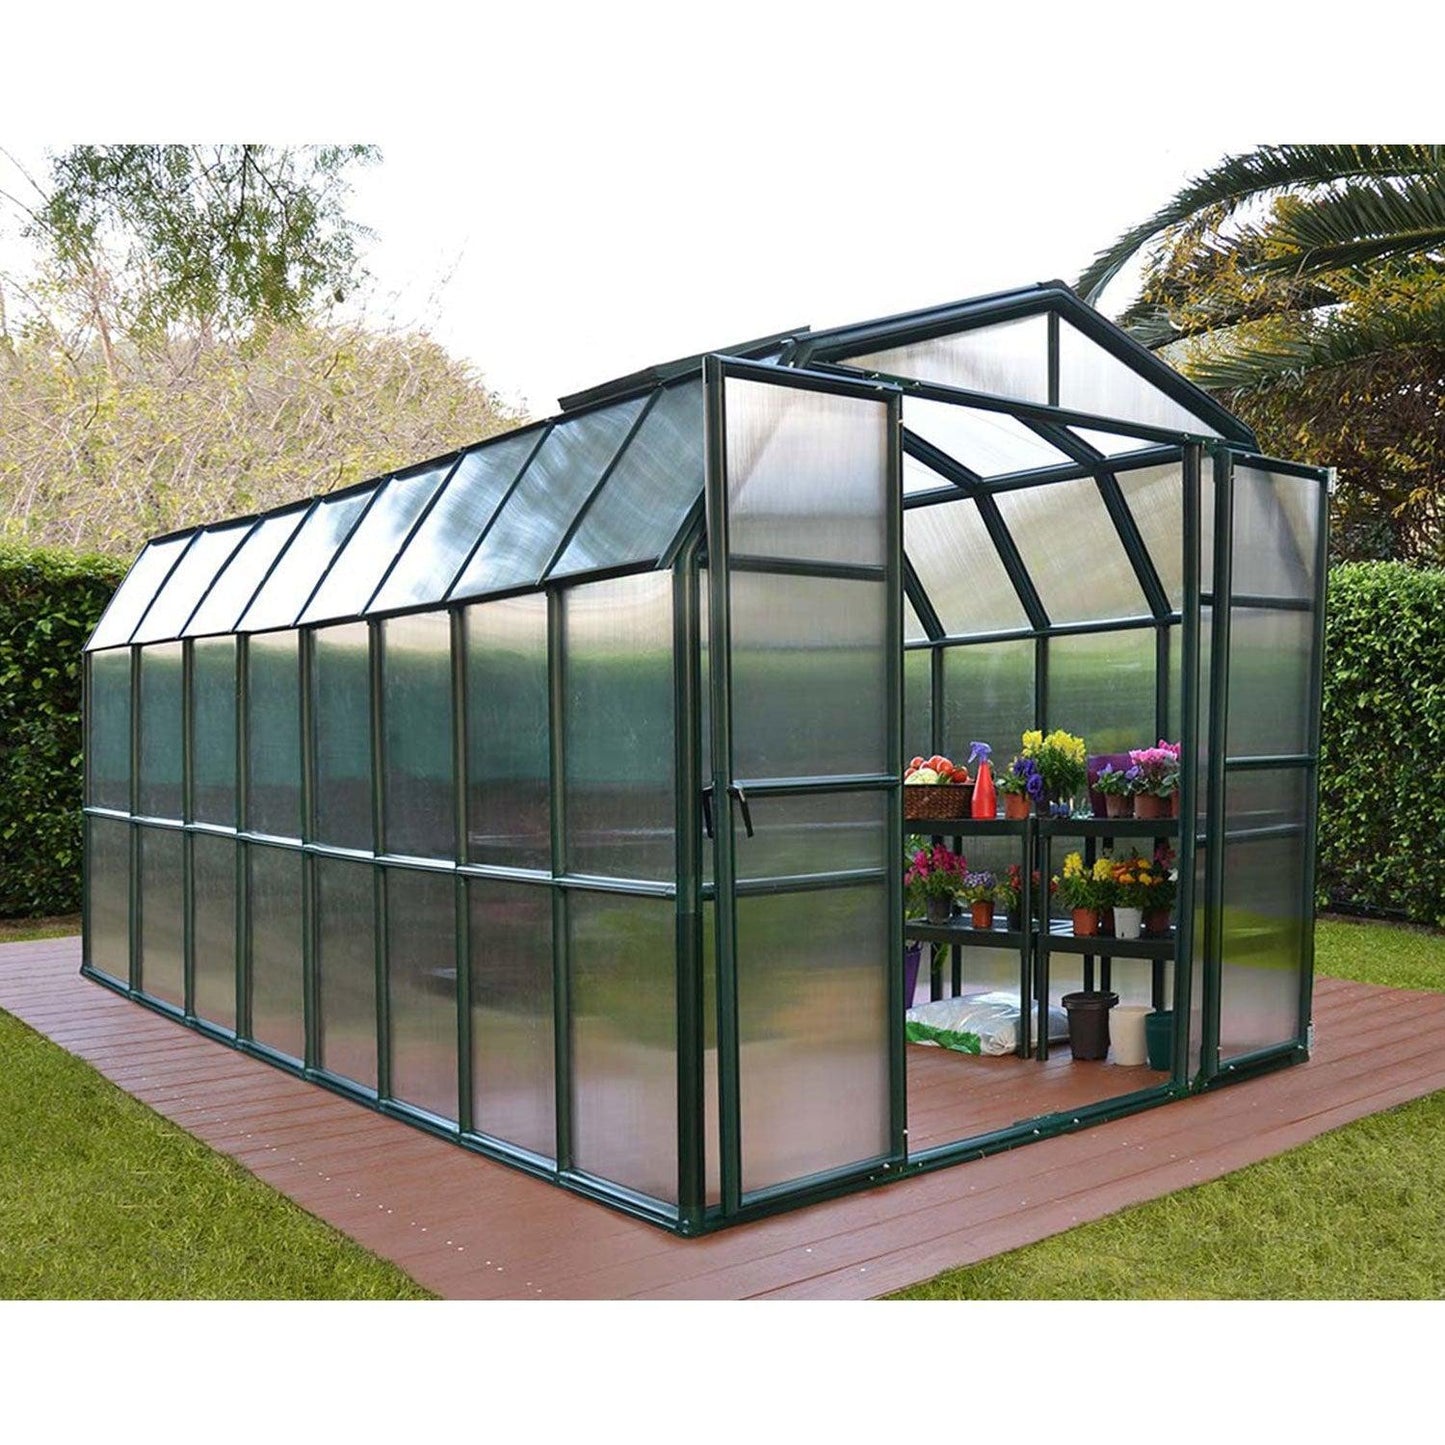 Rion Grand Gardener Greenhouse 8 x 16 ft. - Delightful Yard